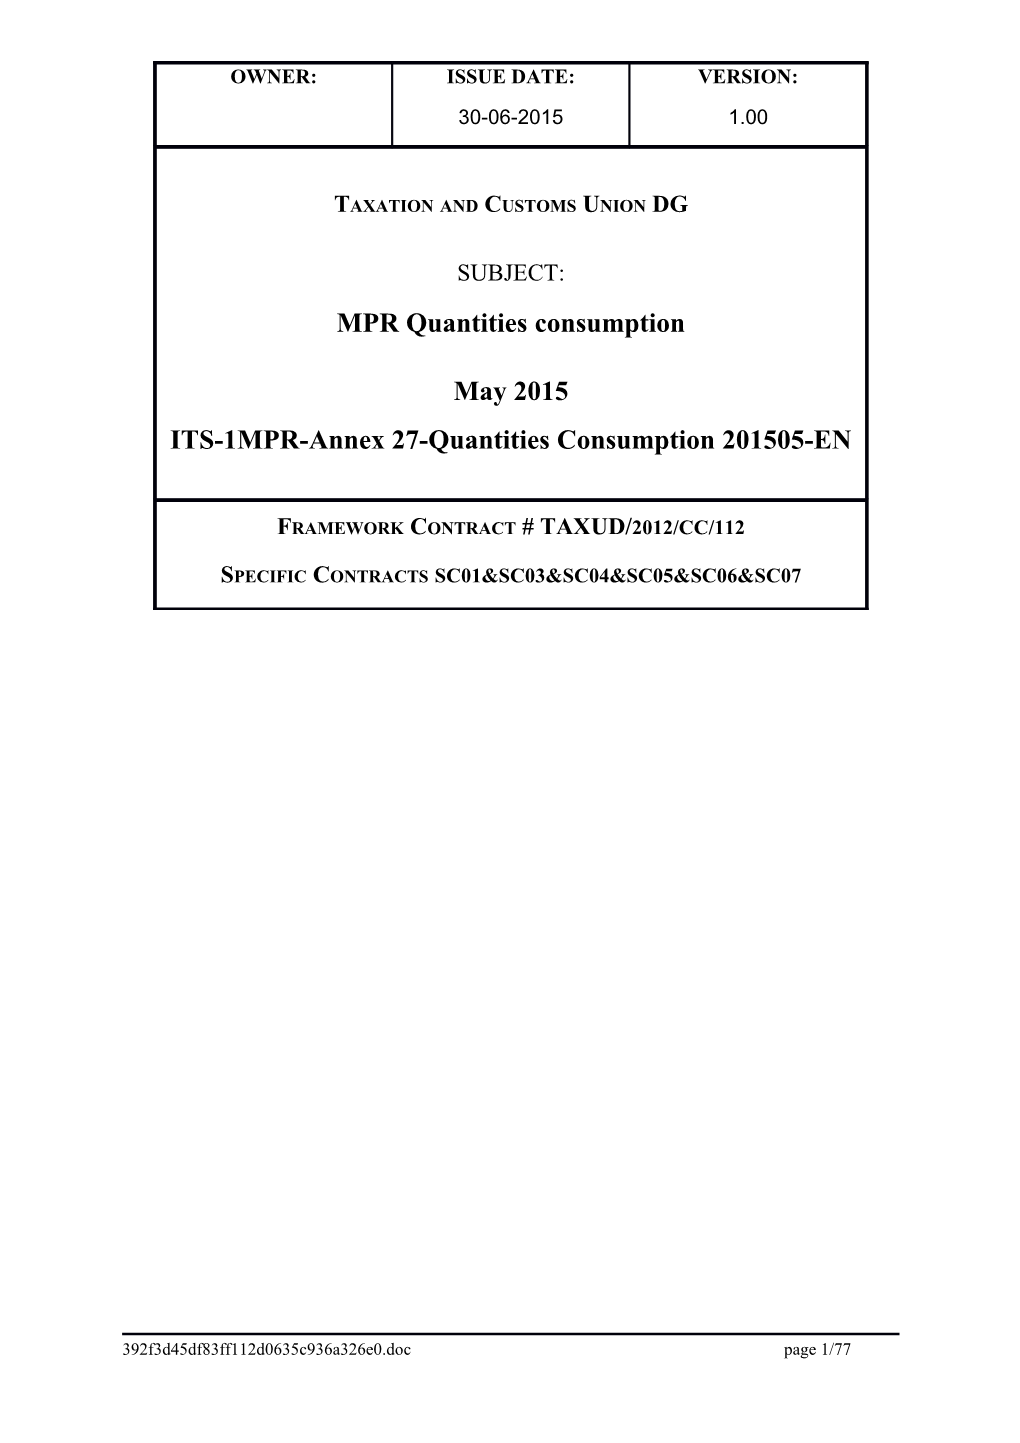 MPR Quantities Consumption